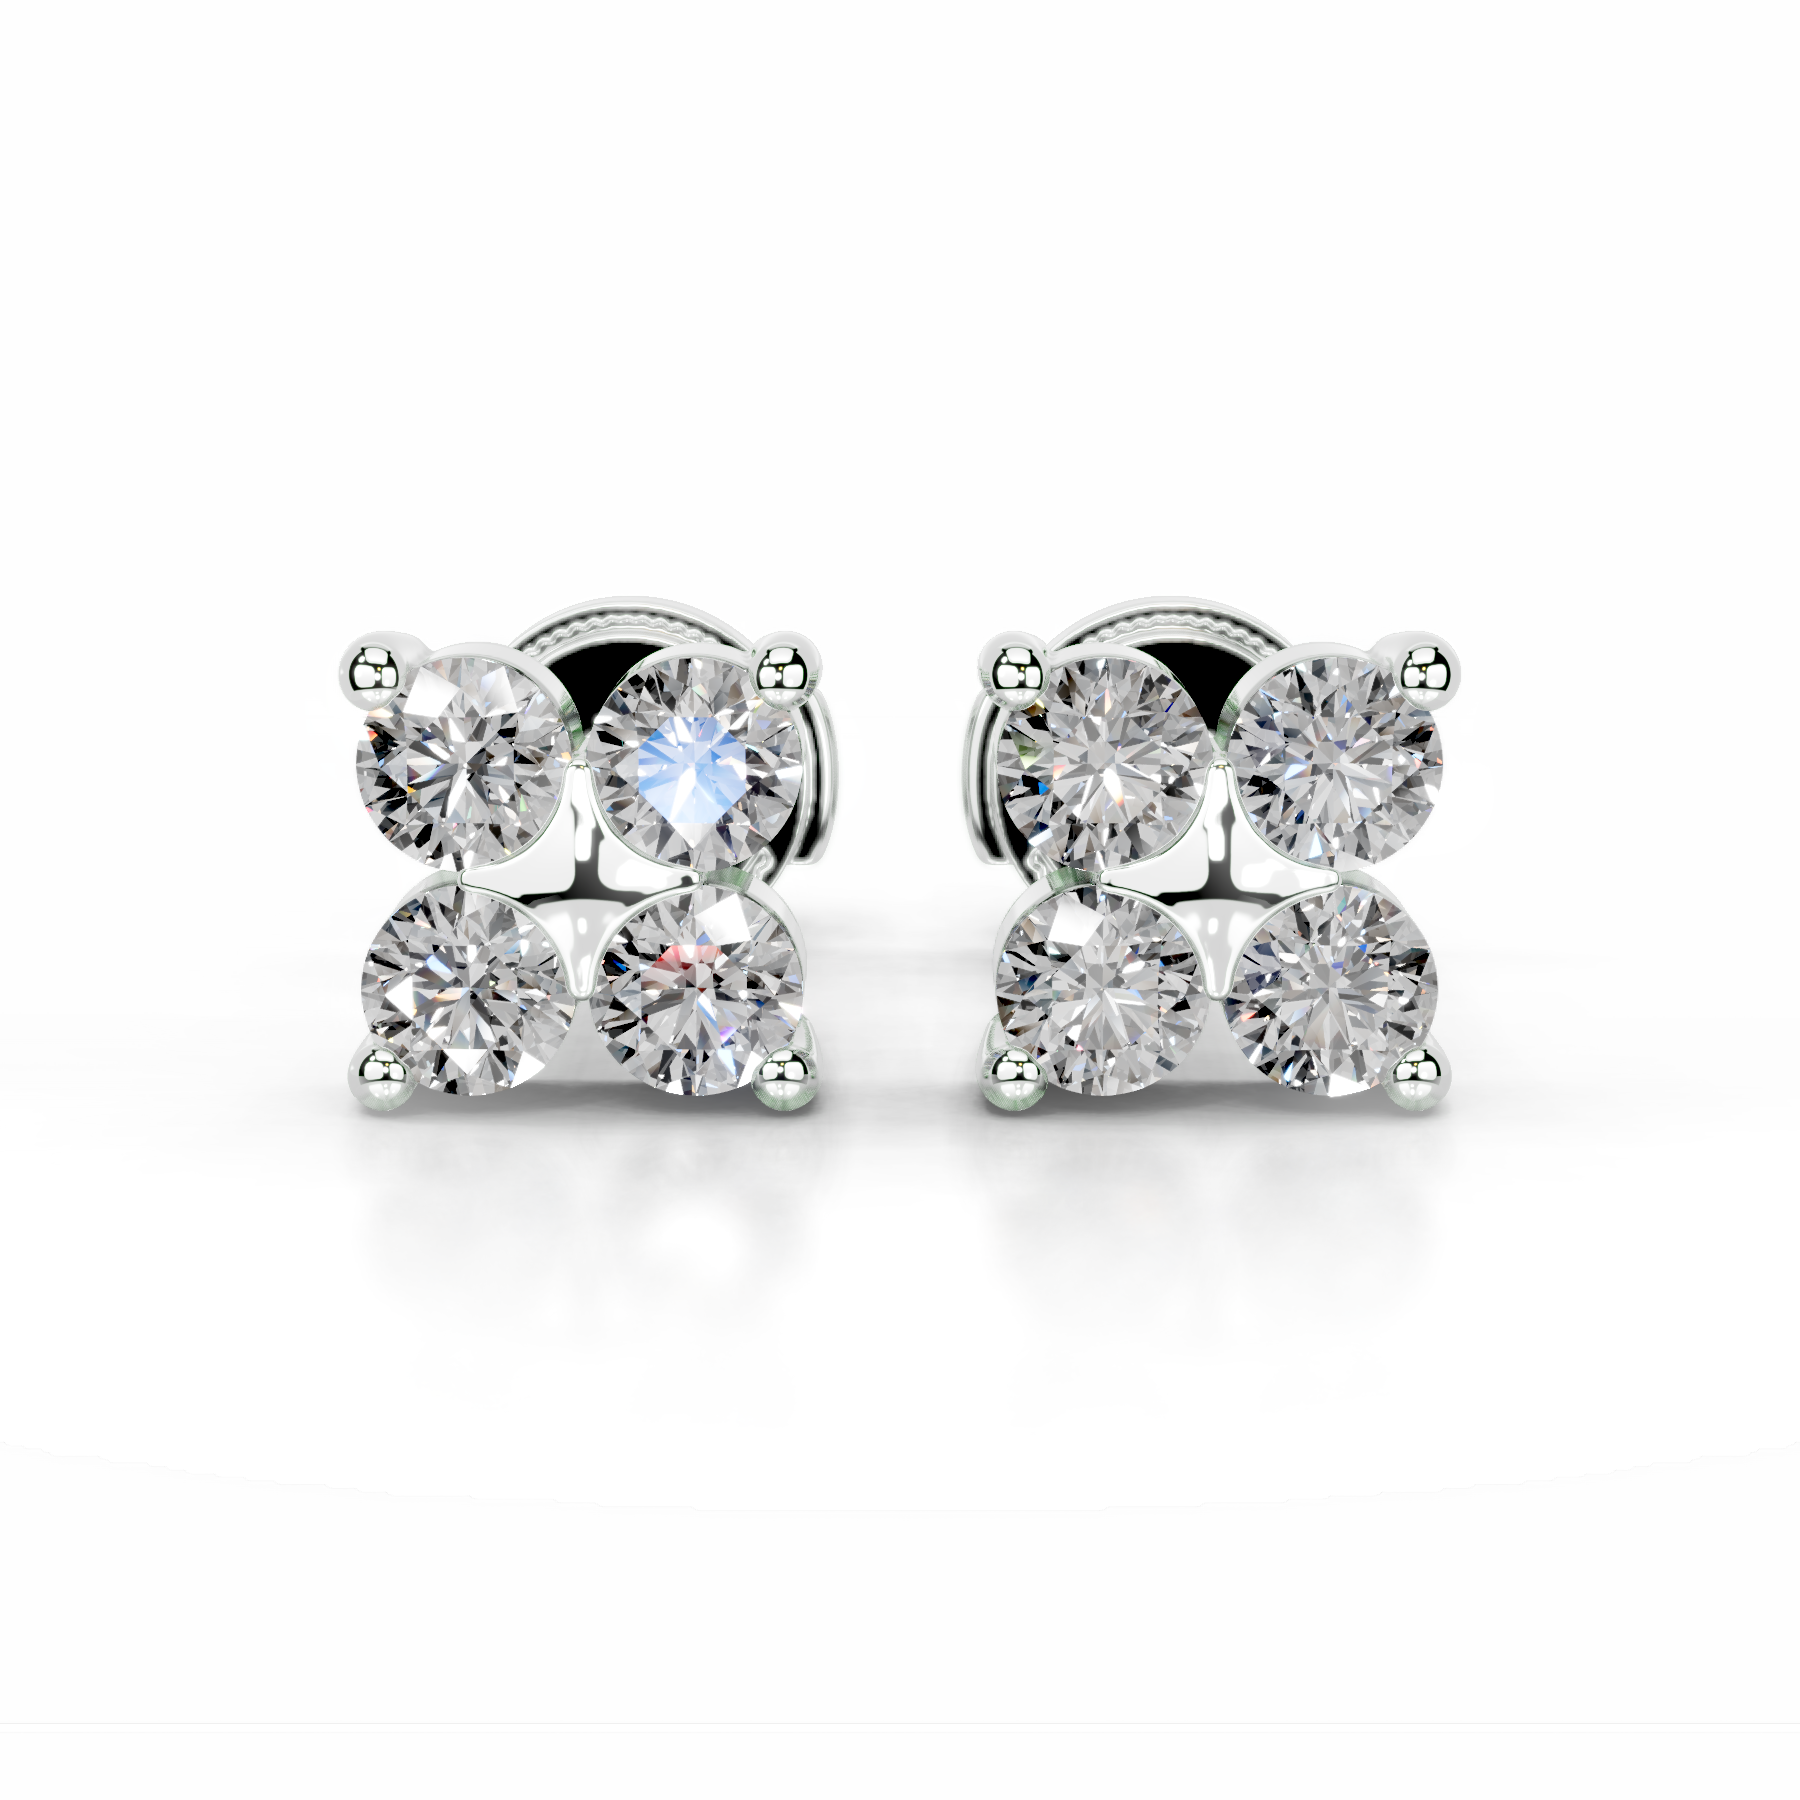 Aurelia Diamond Studs Earrings   (0.40 Carat) -14K White Gold